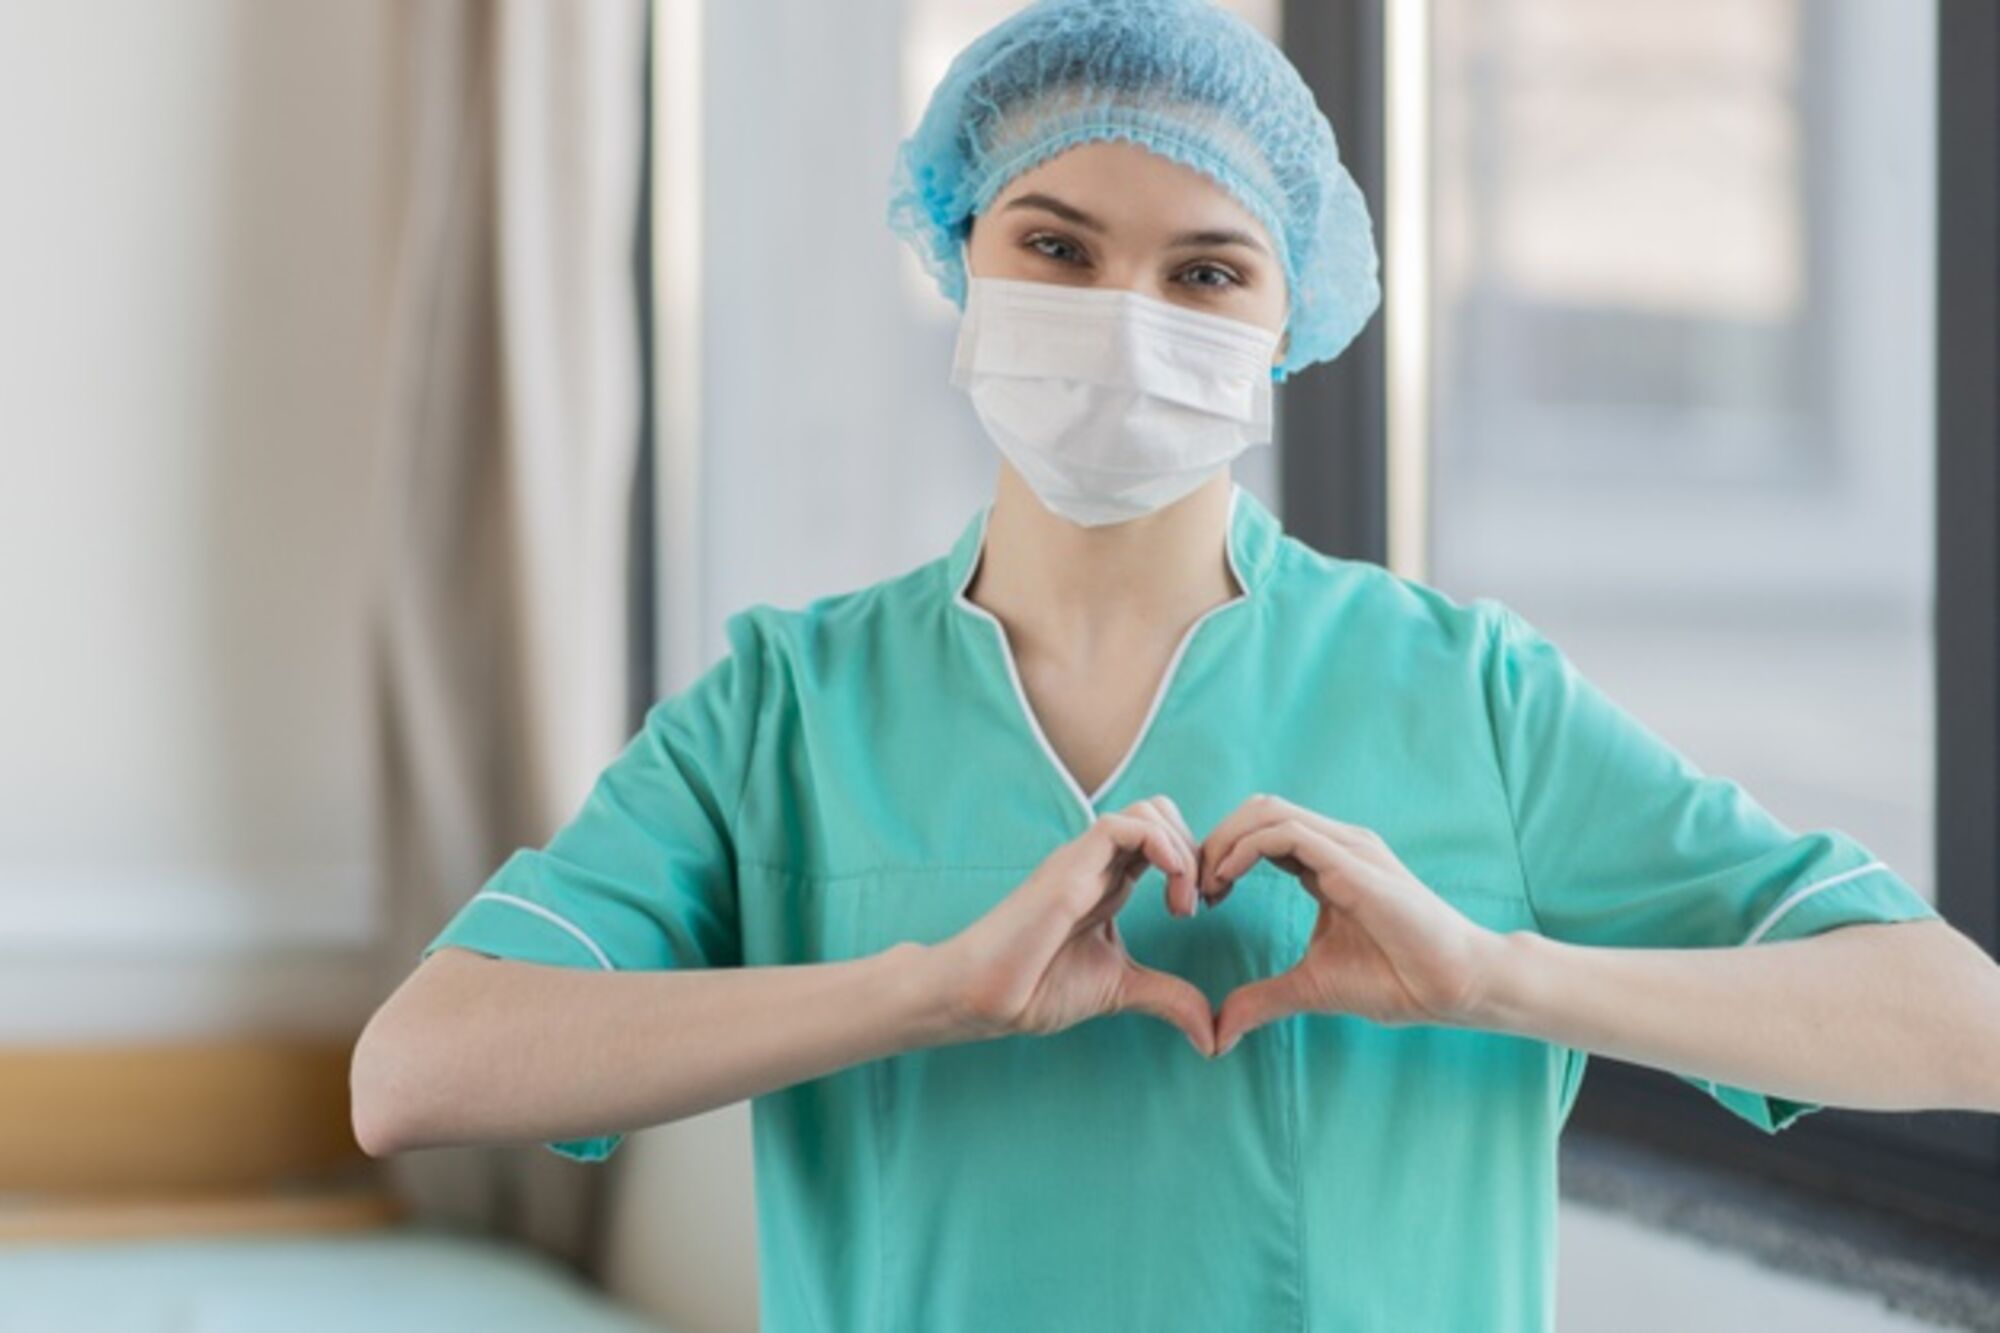 nurse-with-hands-heart-shape_23-2148501079-freepix.jpg